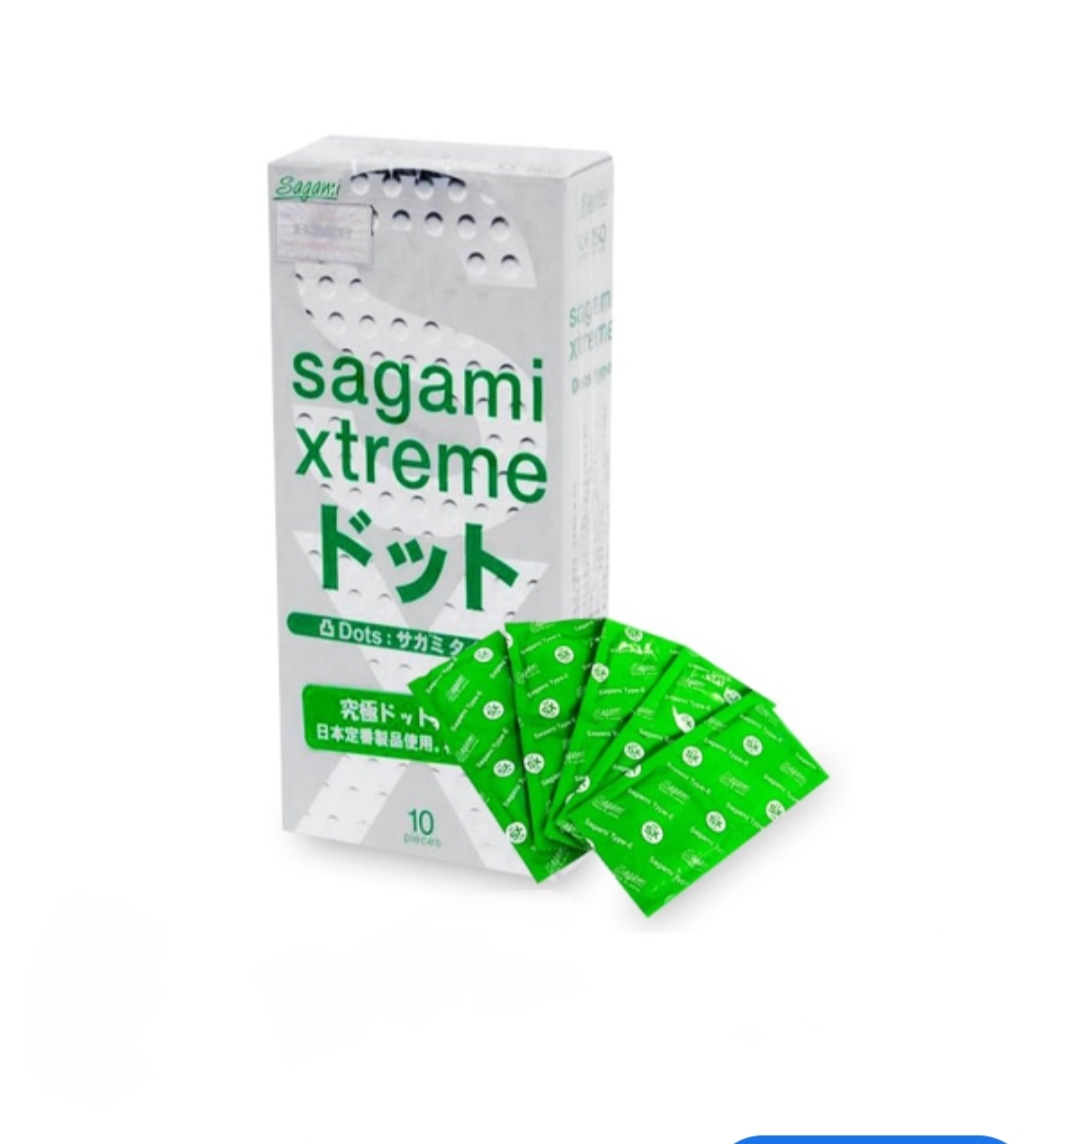 Bao cao su Sagami Xtreme White ( hộp 10 chiếc) - Bao cao su nam có gân gai nhỏ cam kết chính hãng